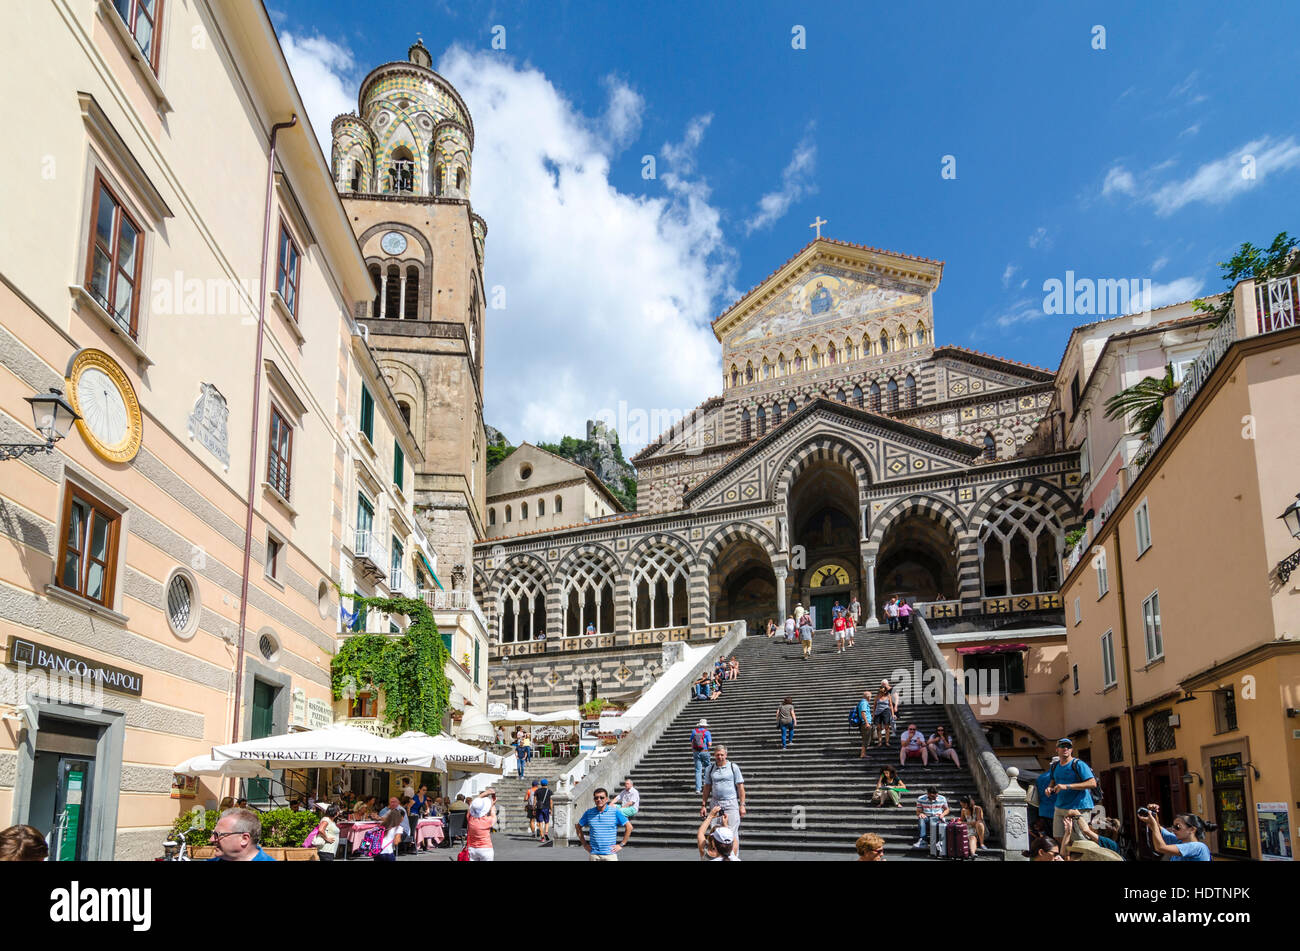 Amalfi Cathedral, Duomo di Amalfi. Tourists and visitors at the historic tourist attraction on the Amalfi Coast, Italy Stock Photo